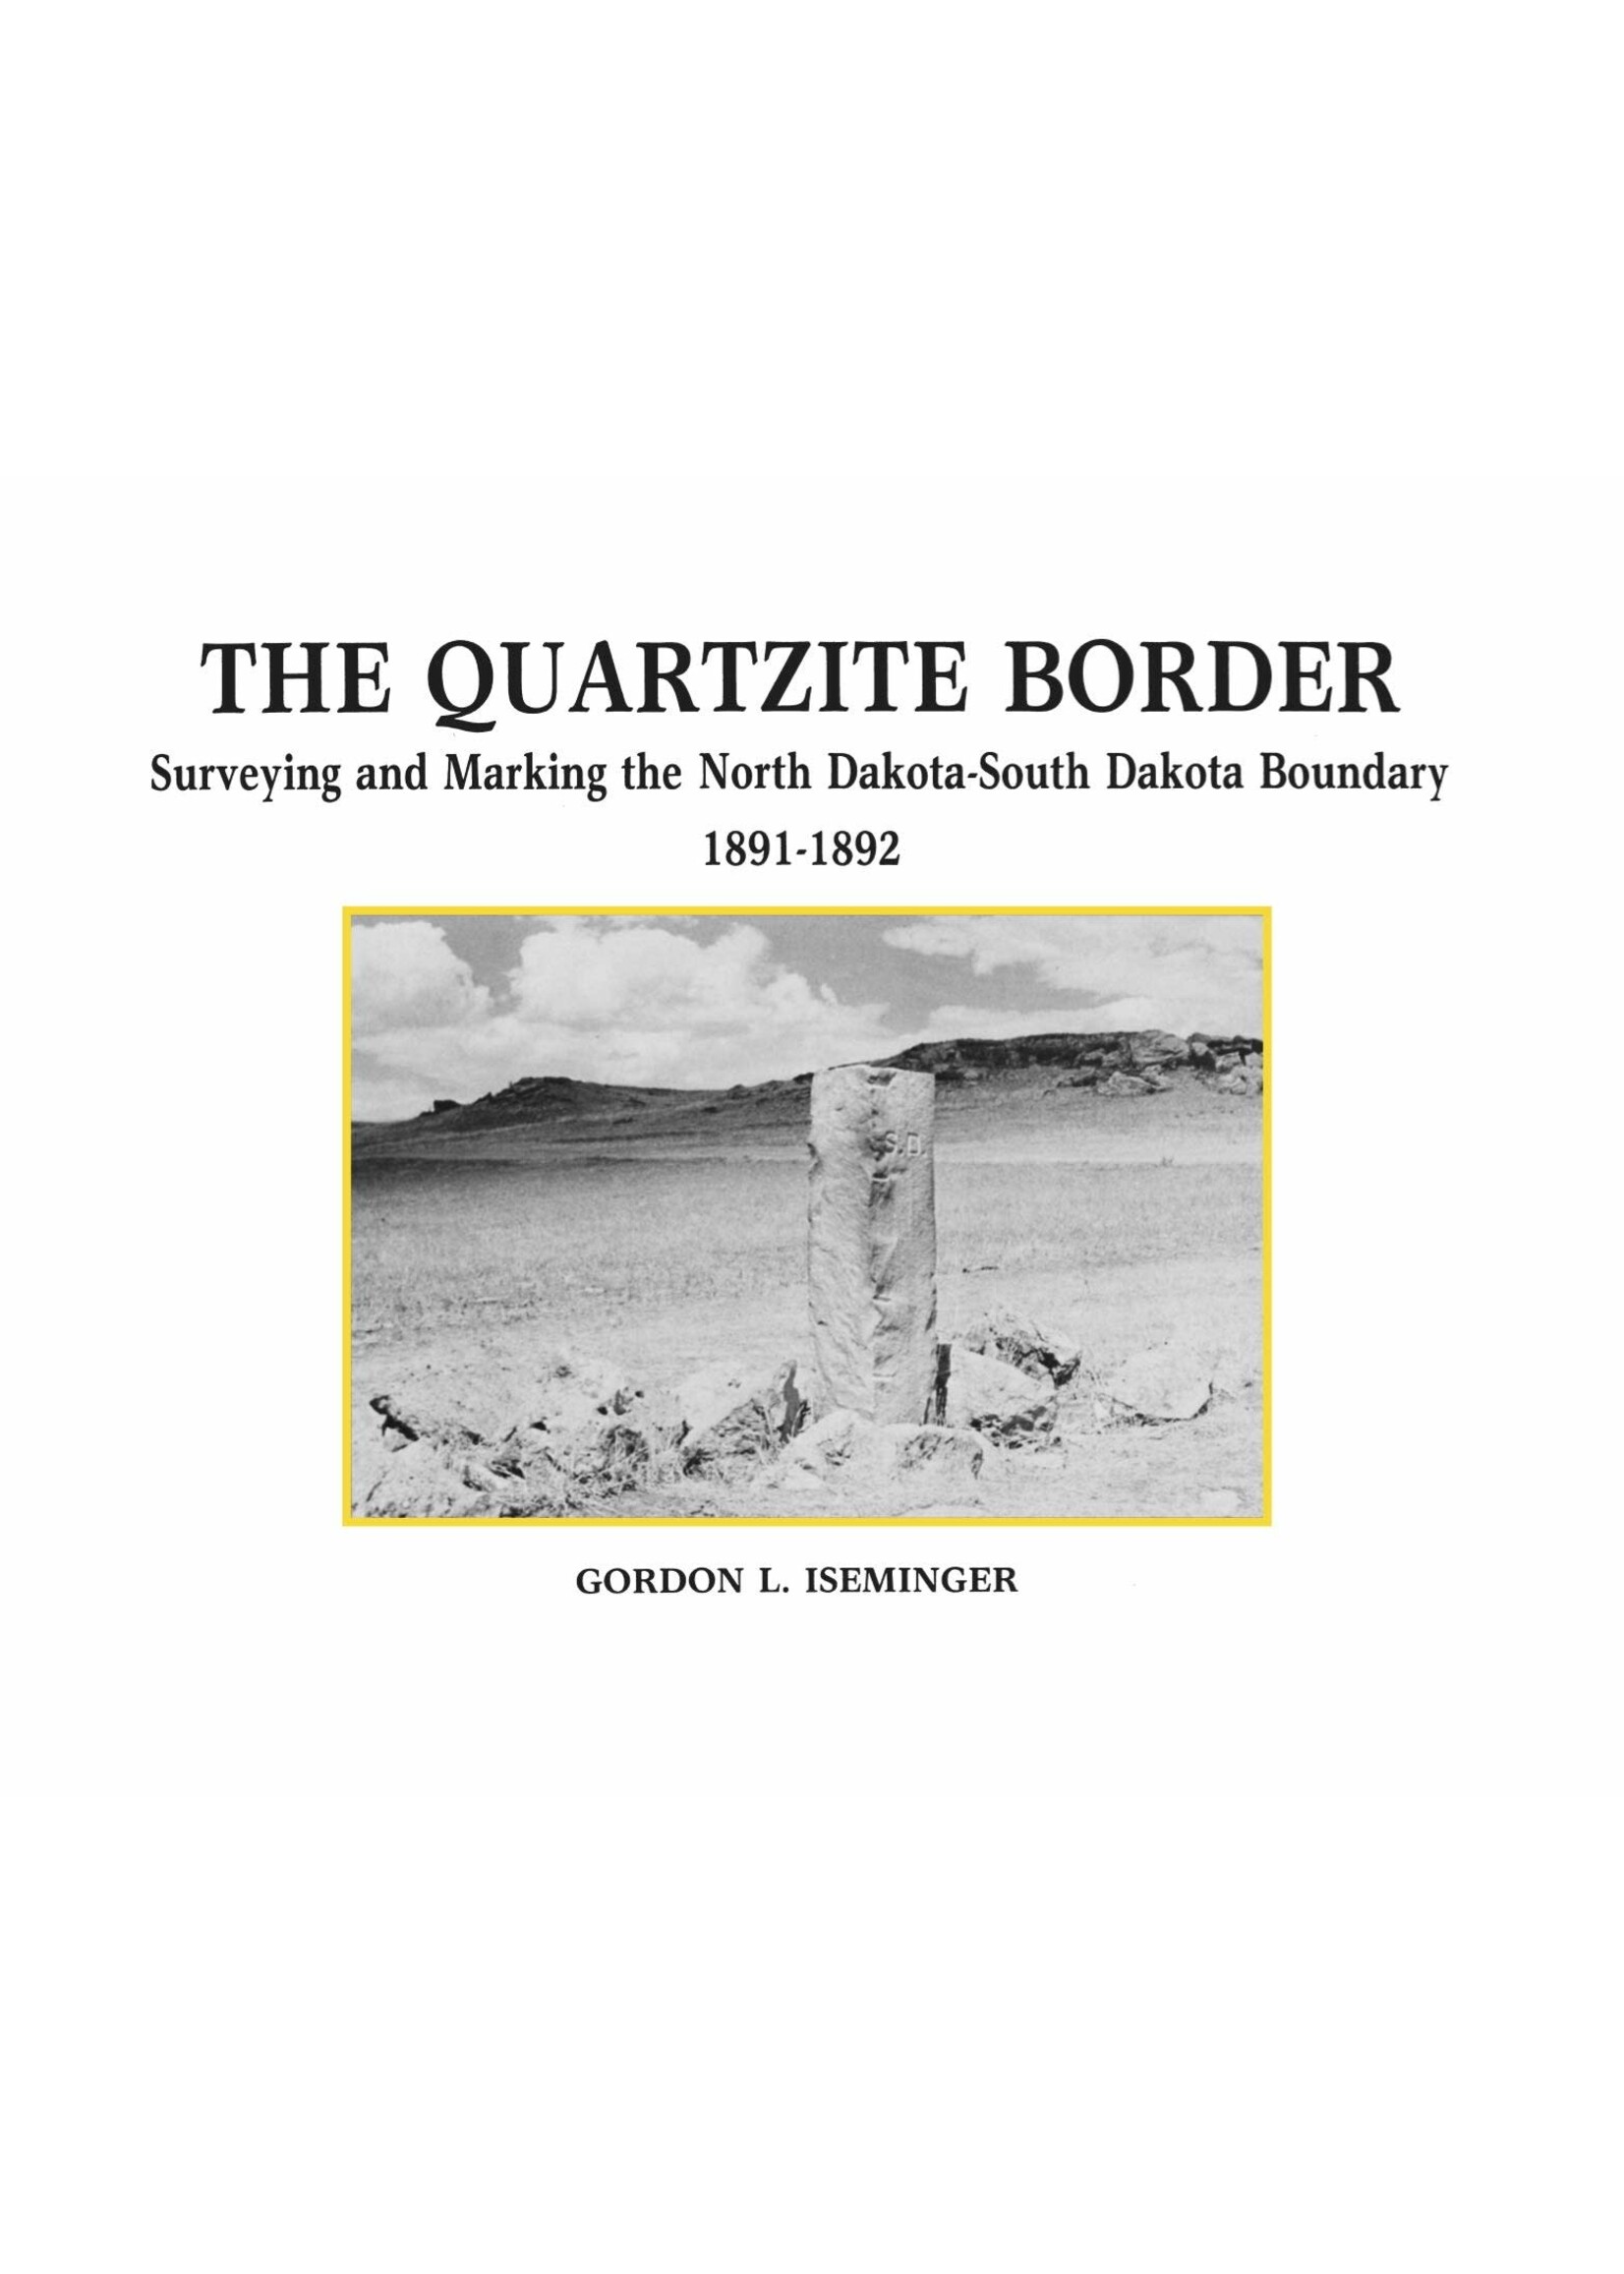 The Quartzite Border: Surveying and Marking the North Dakota-South Dakota Boundary, 1891-1892